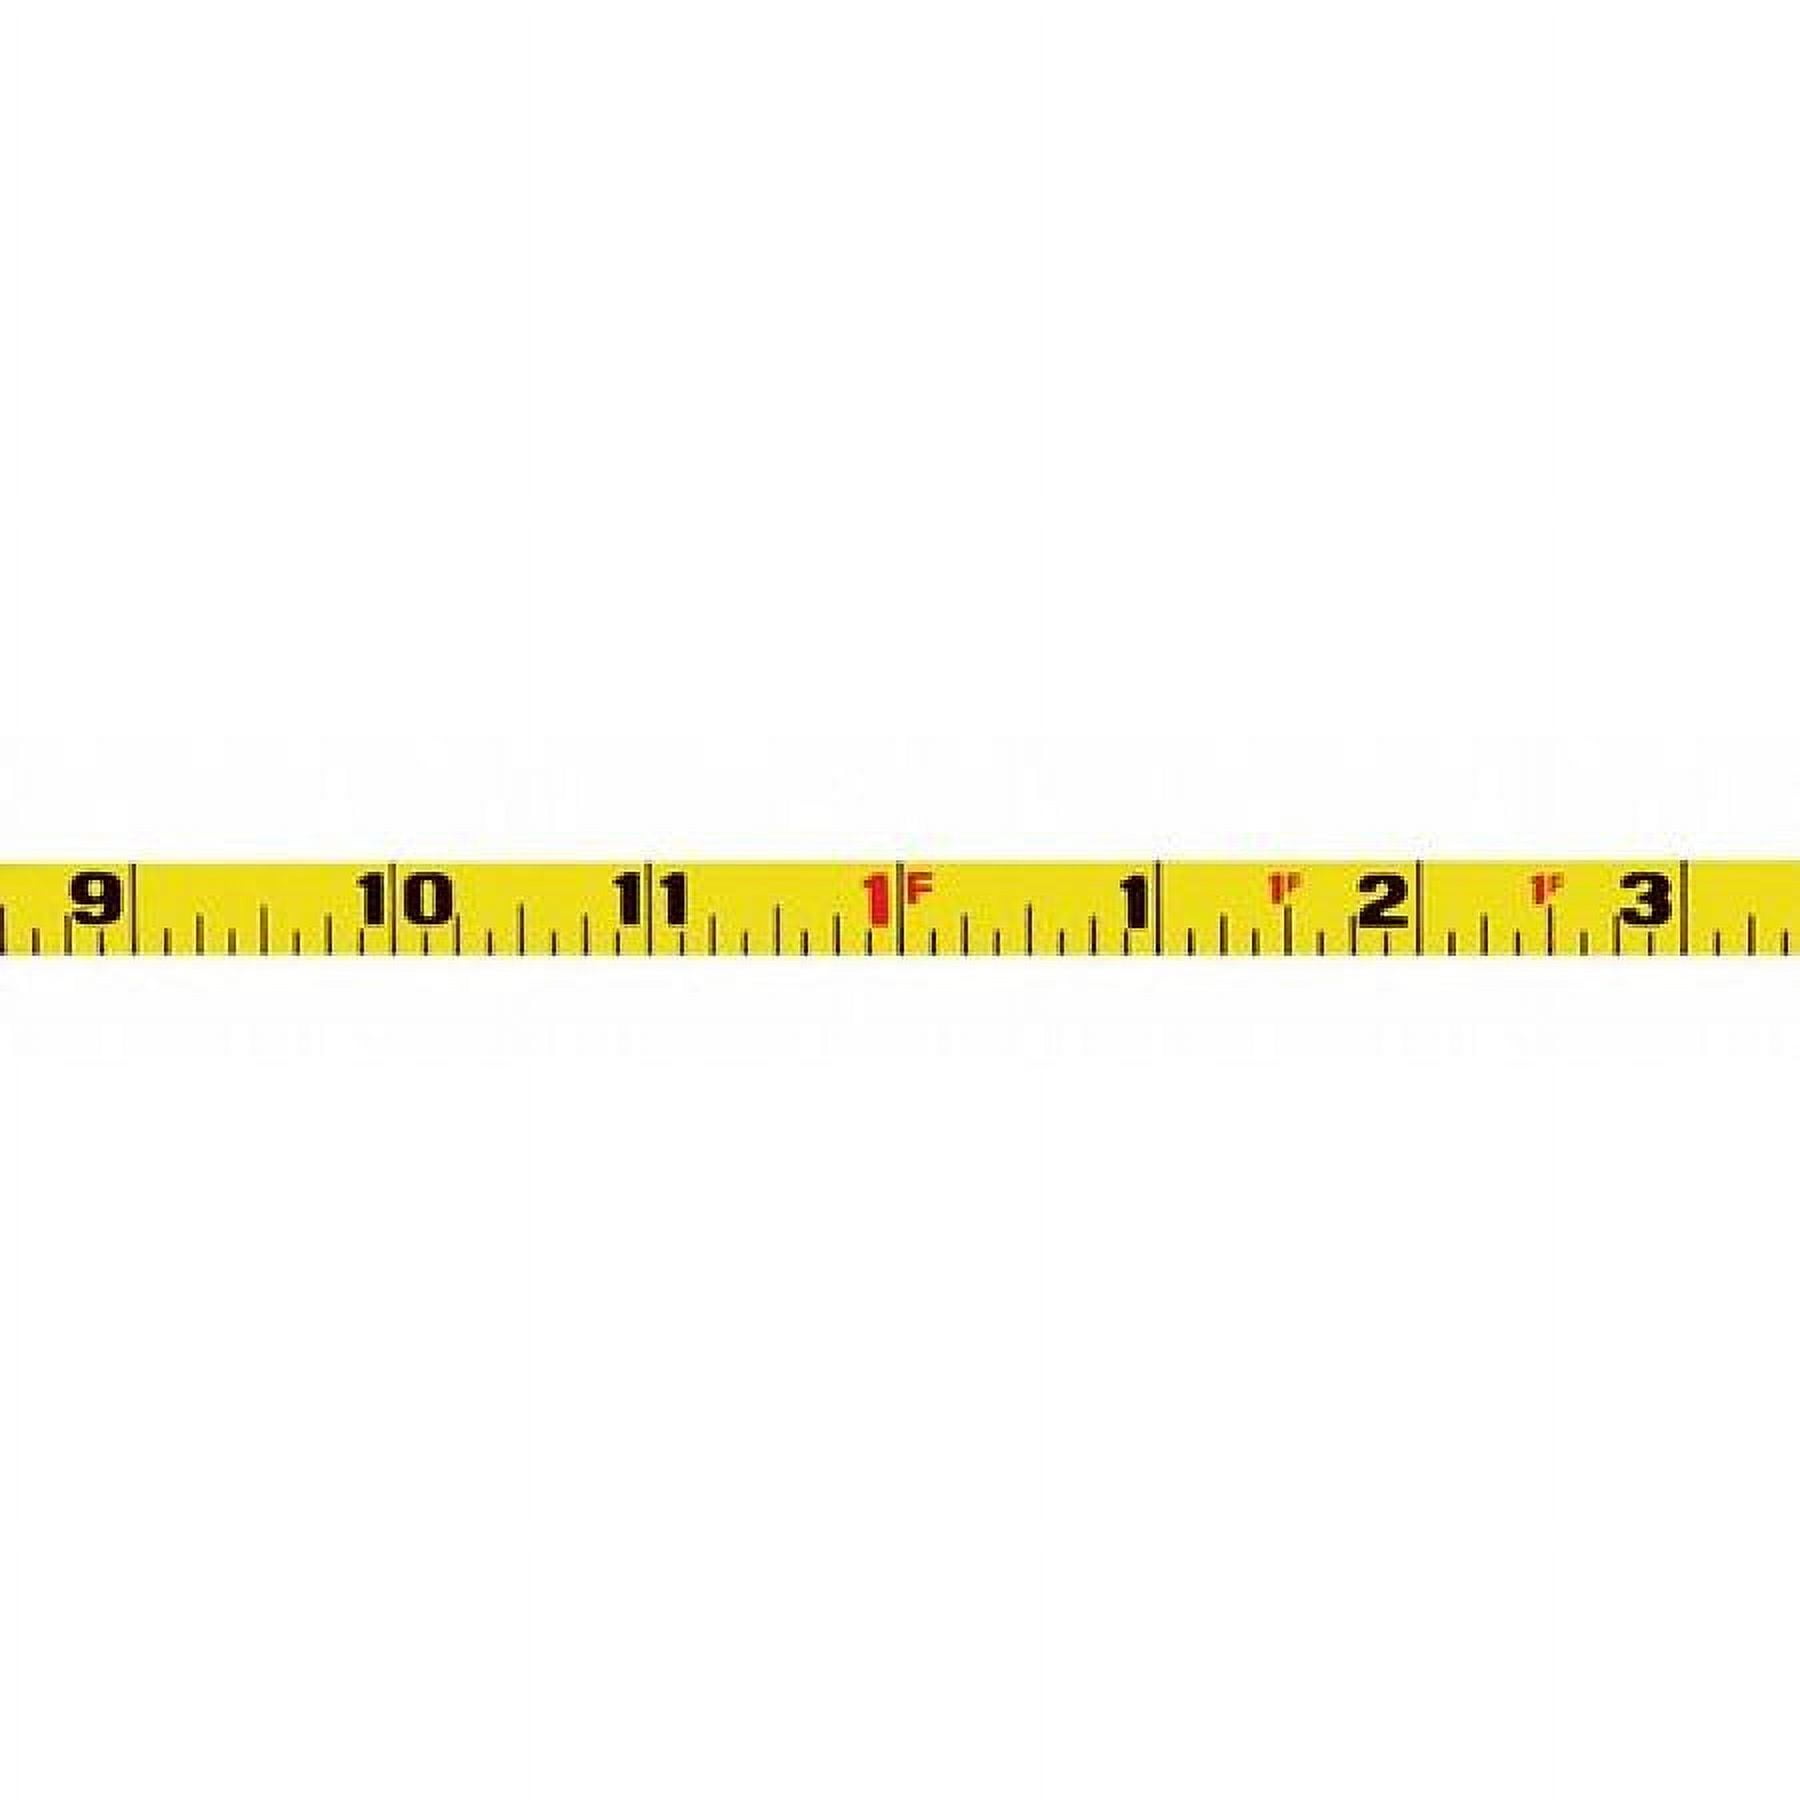 Keson Long Tape Measure,3/8 In x 50 ft,Orange ST5018, 1 - City Market